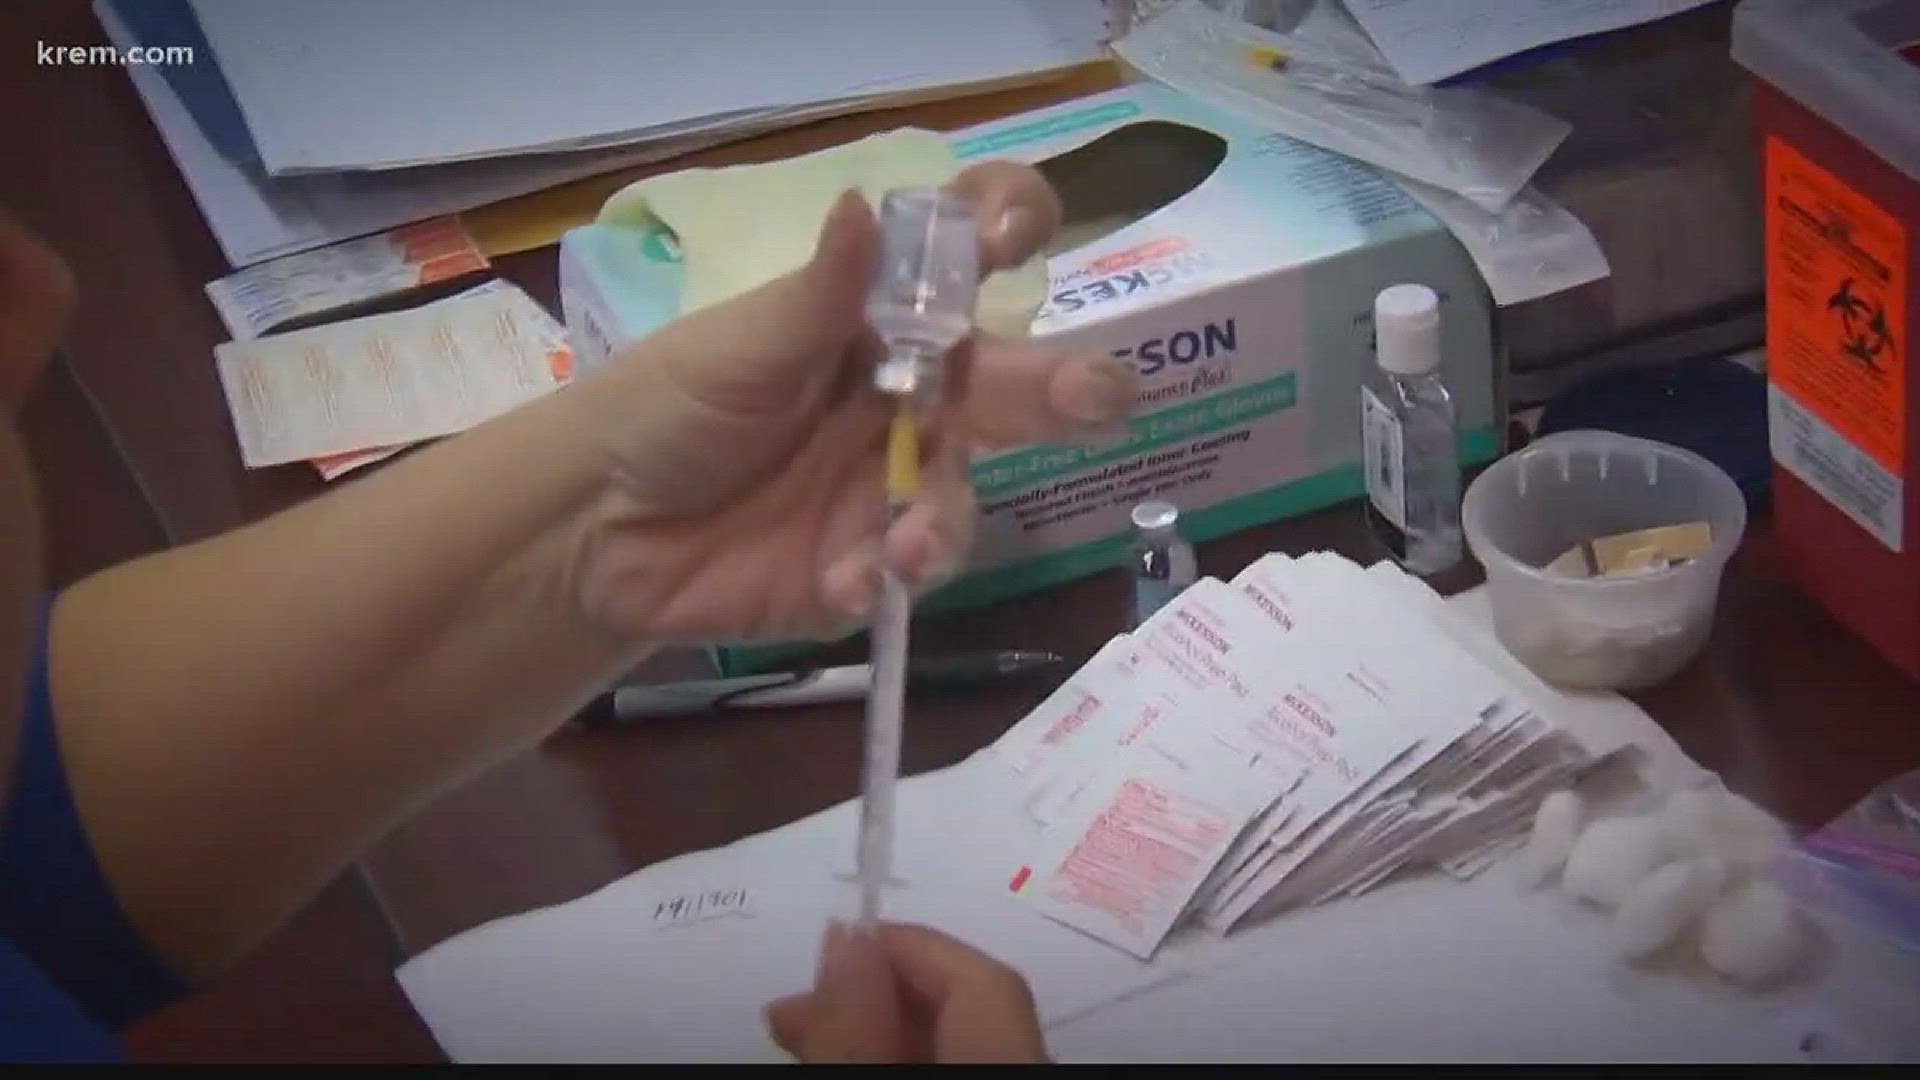 KREM 2'S Medical Reporter Rose Beltz has more on how effective flu shots really are.